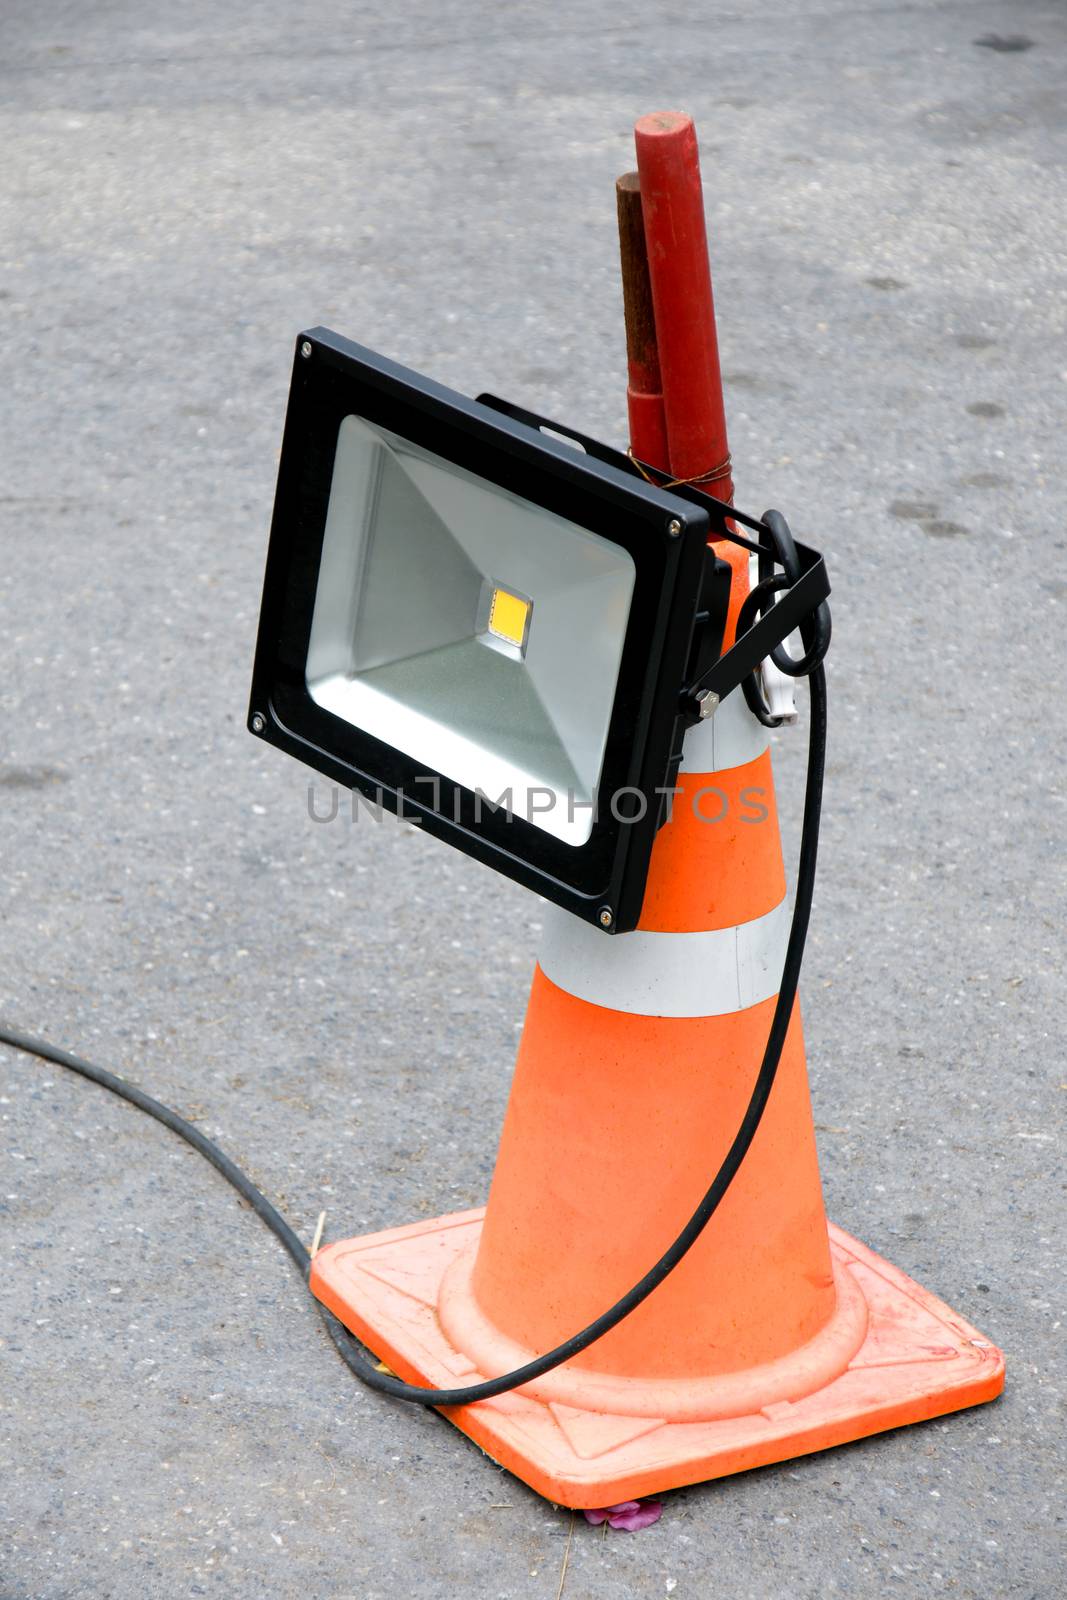 LED energy saving industrial flood light mounted on orange strip by mranucha